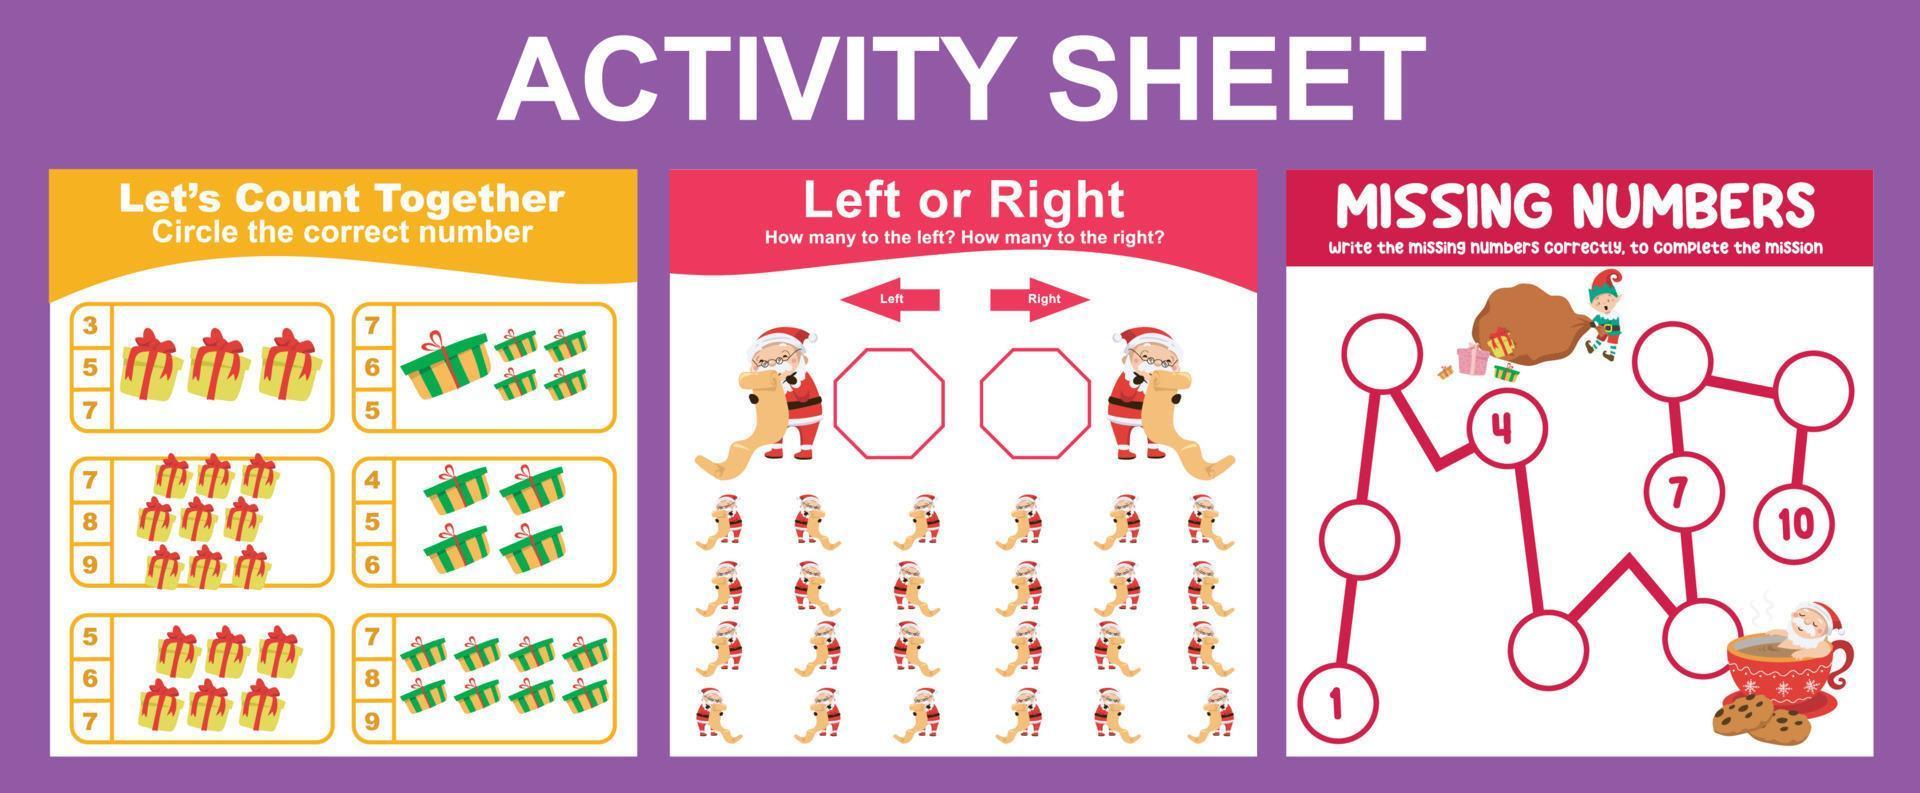 3 in 1 Mathematic Activity Sheet for children vector